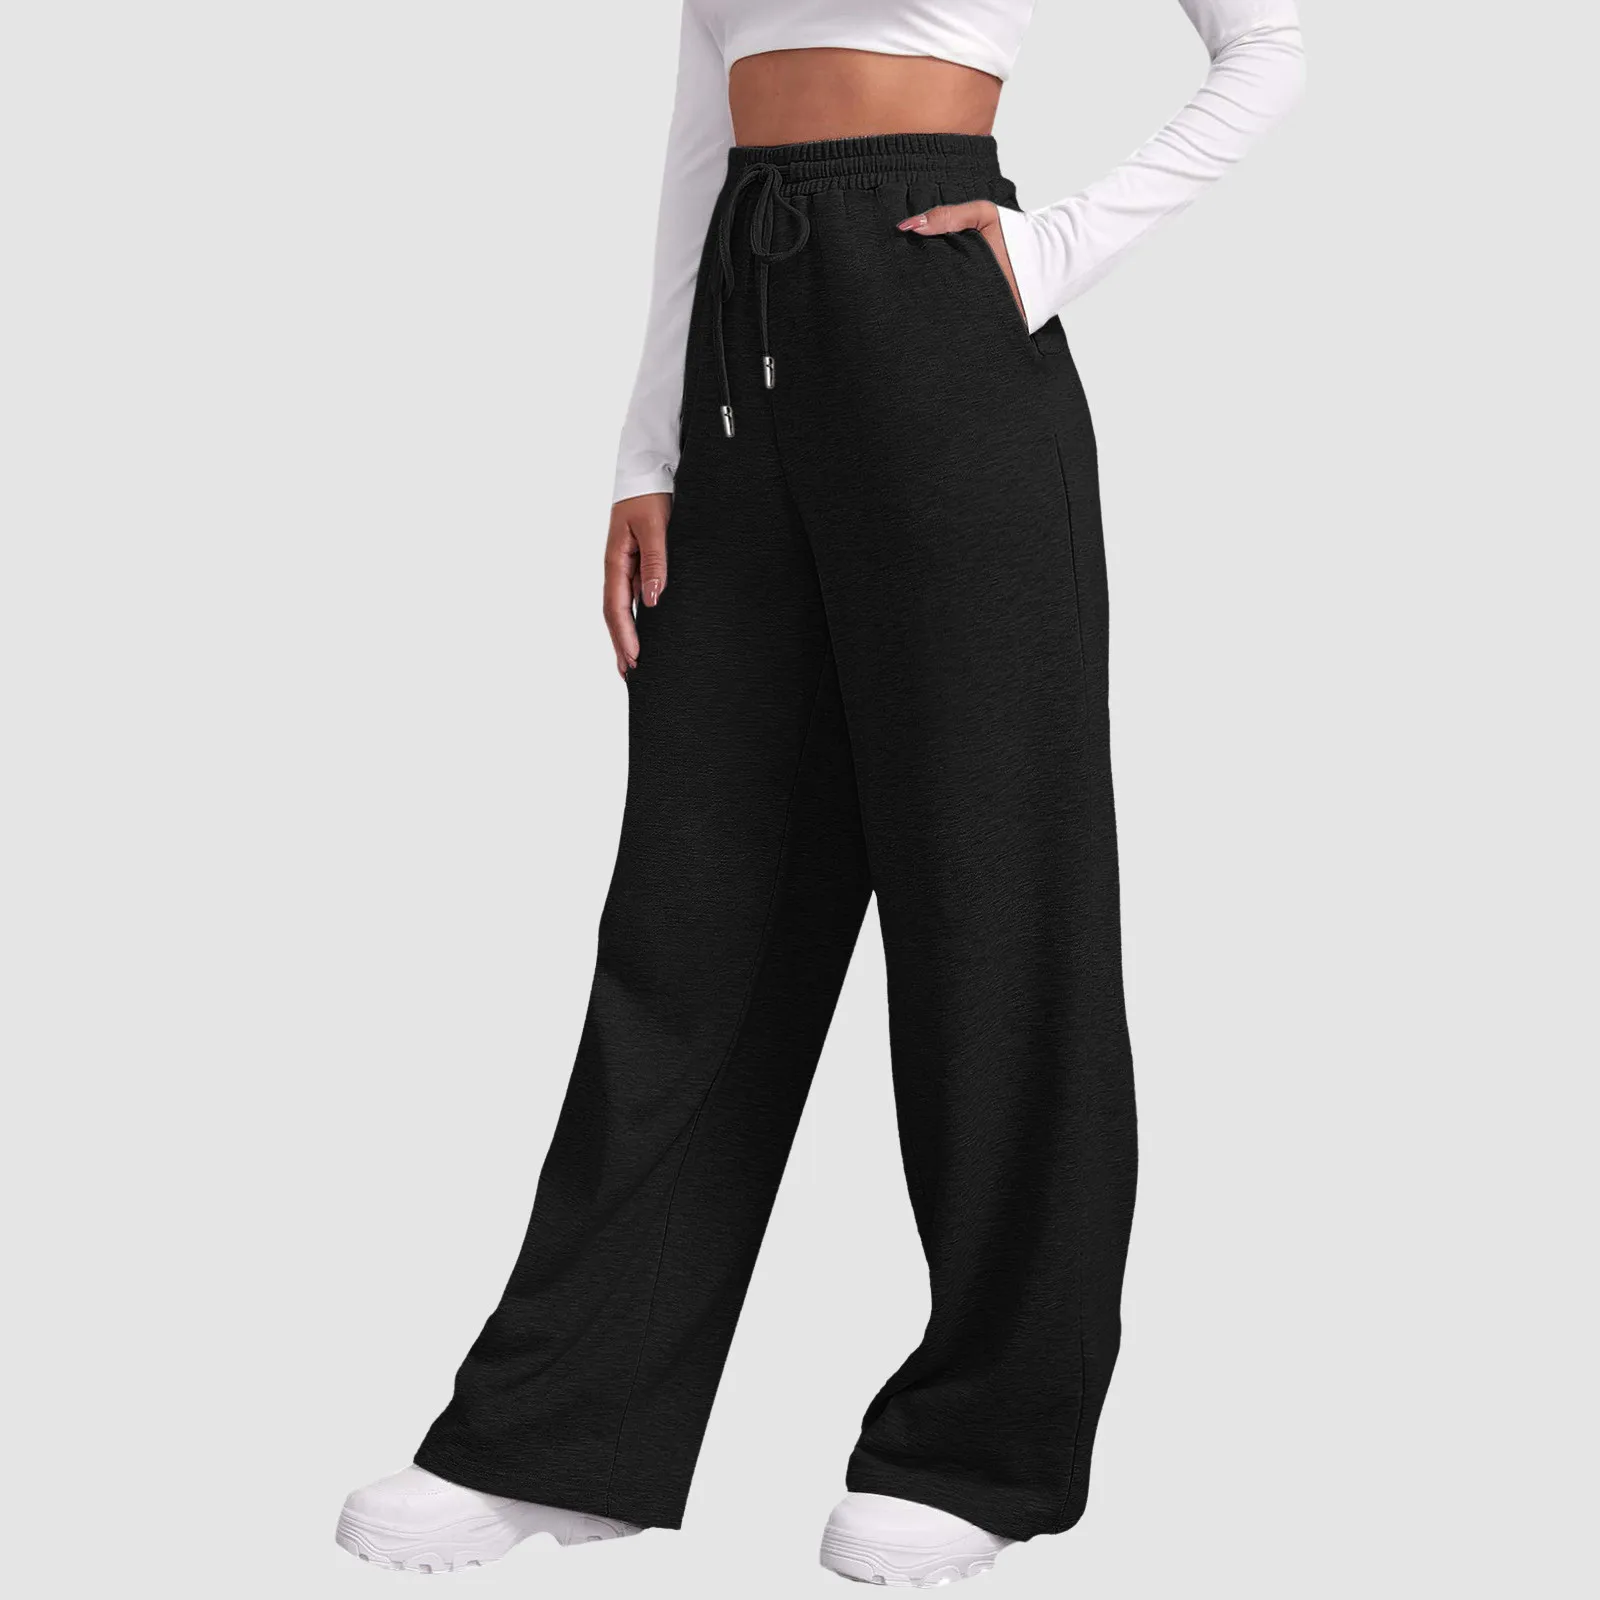 Women's Fleece Lined Sweatpants Straight Pants Bottom All-Math Plain Fitness Joggers Pants Travel Basic